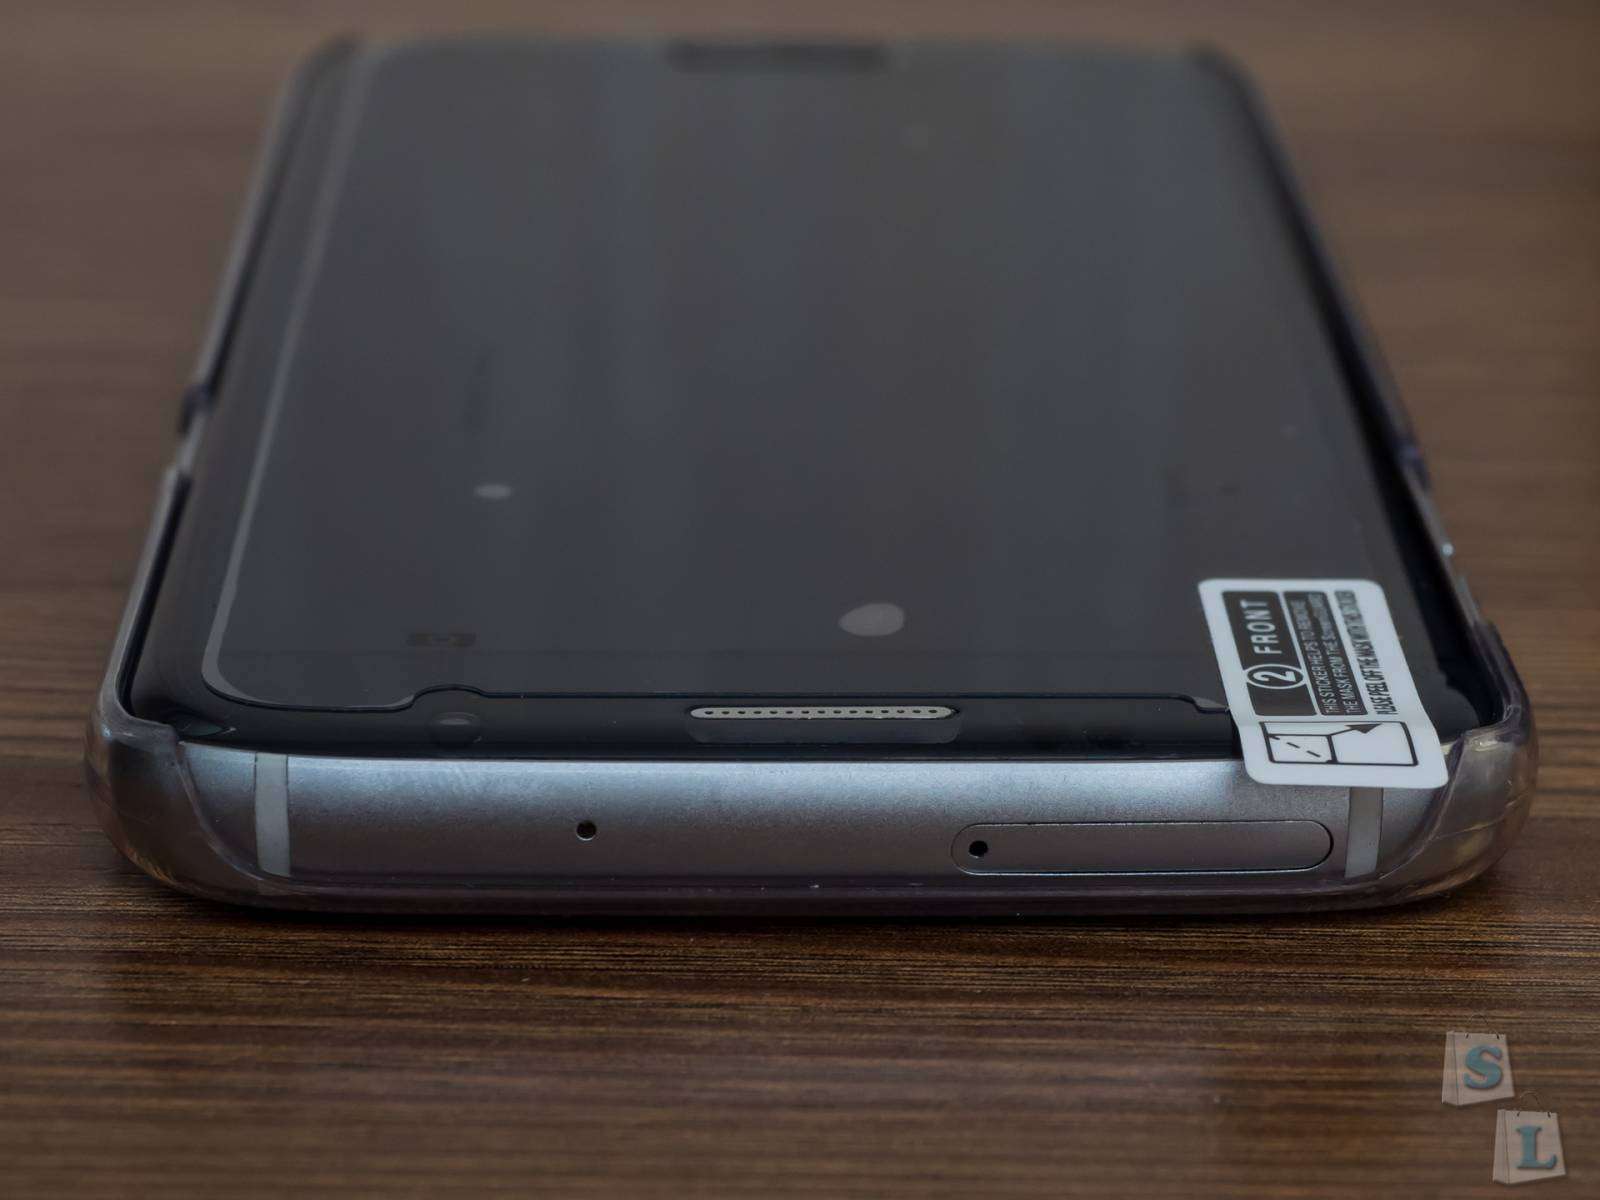 GearBest: Обзор смартфона Bluboo Edge - отчет о призе по акции Gearbest как Дед Мороз